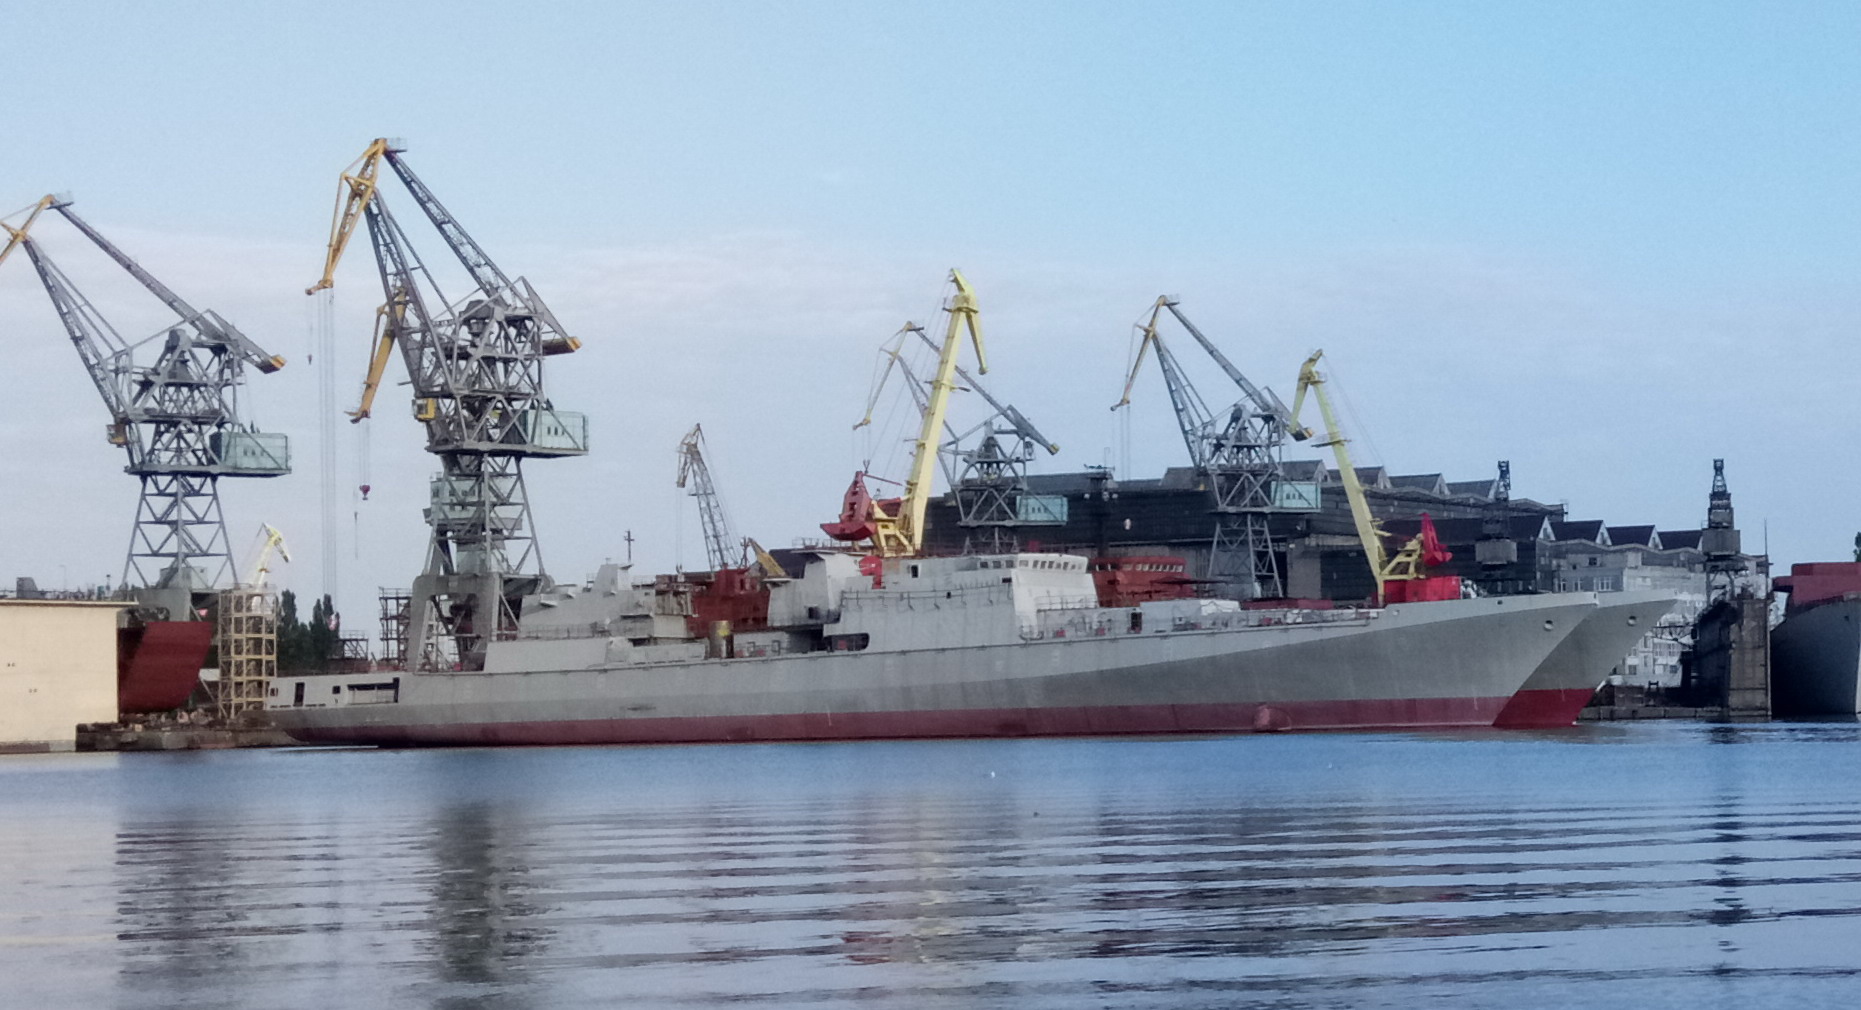 Адмирал Бутаков (на переднем плане) и Адмирал Истомин (за ним)_9.7.2018 г.jpg